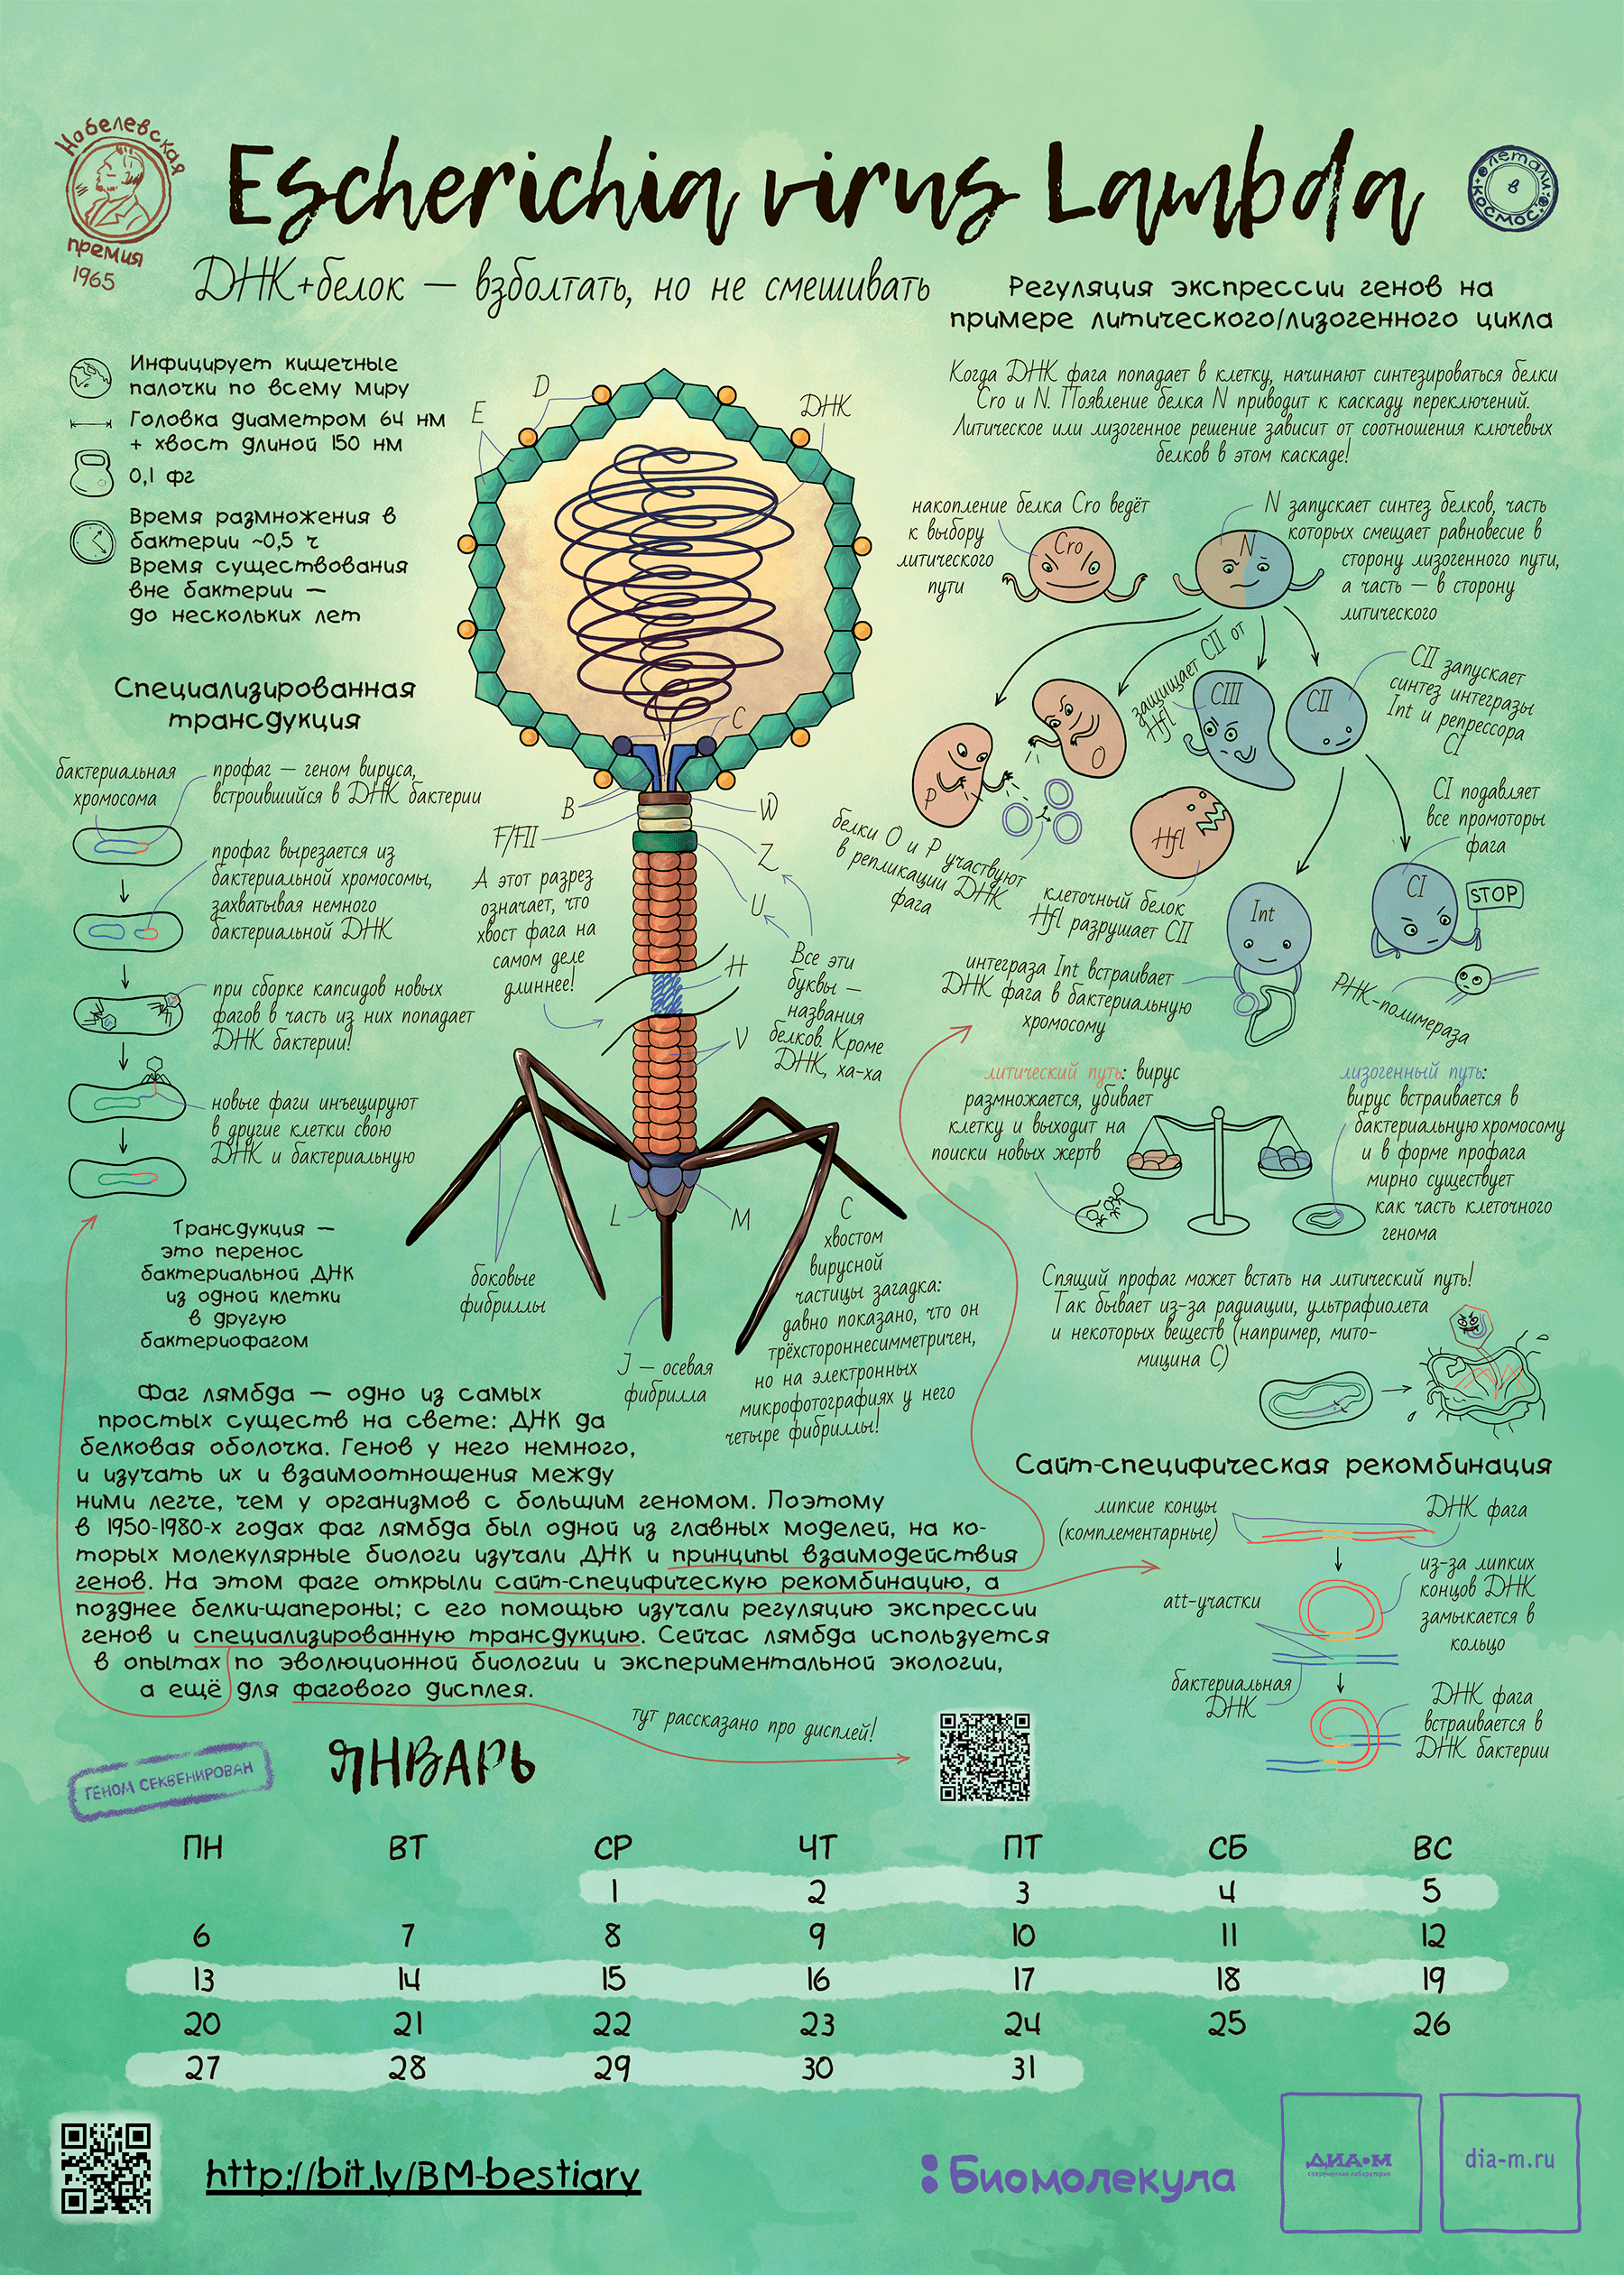 Бактериофаг лямбда как герой календаря «Биомолекулы»